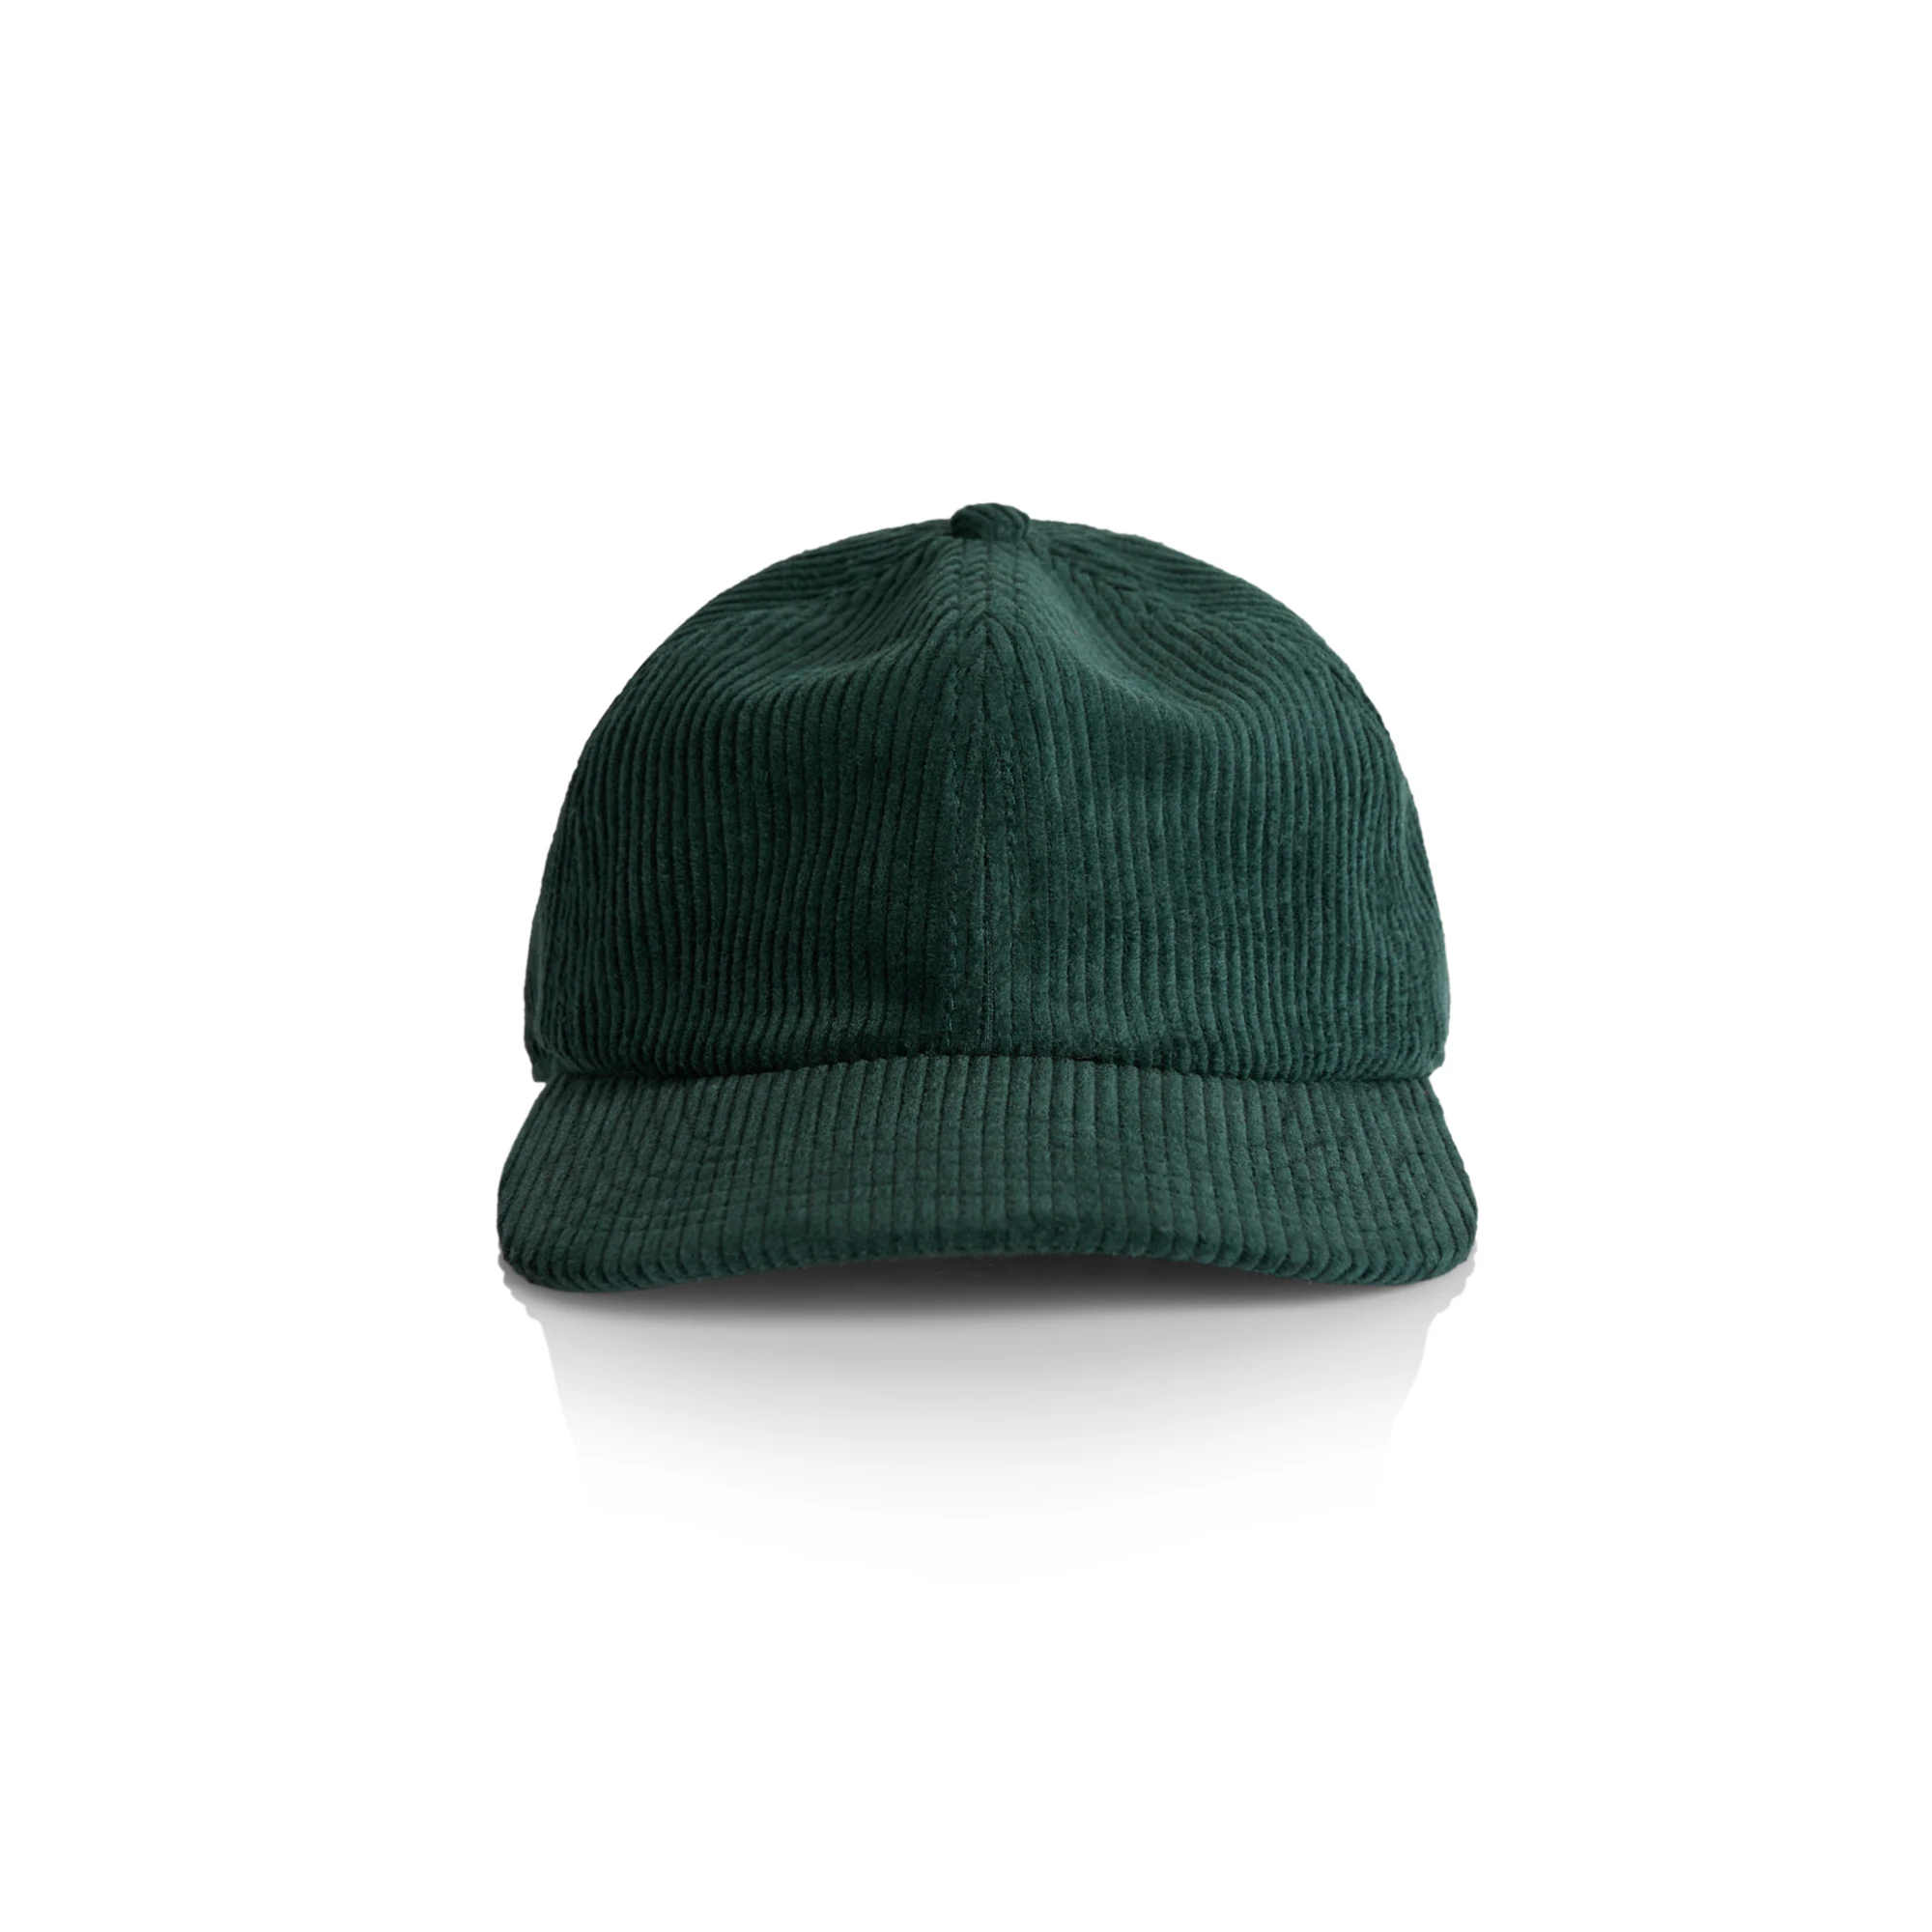 Blank corduroy hat custom design dark army green 6 panel cord baseball cap high quality custom logo